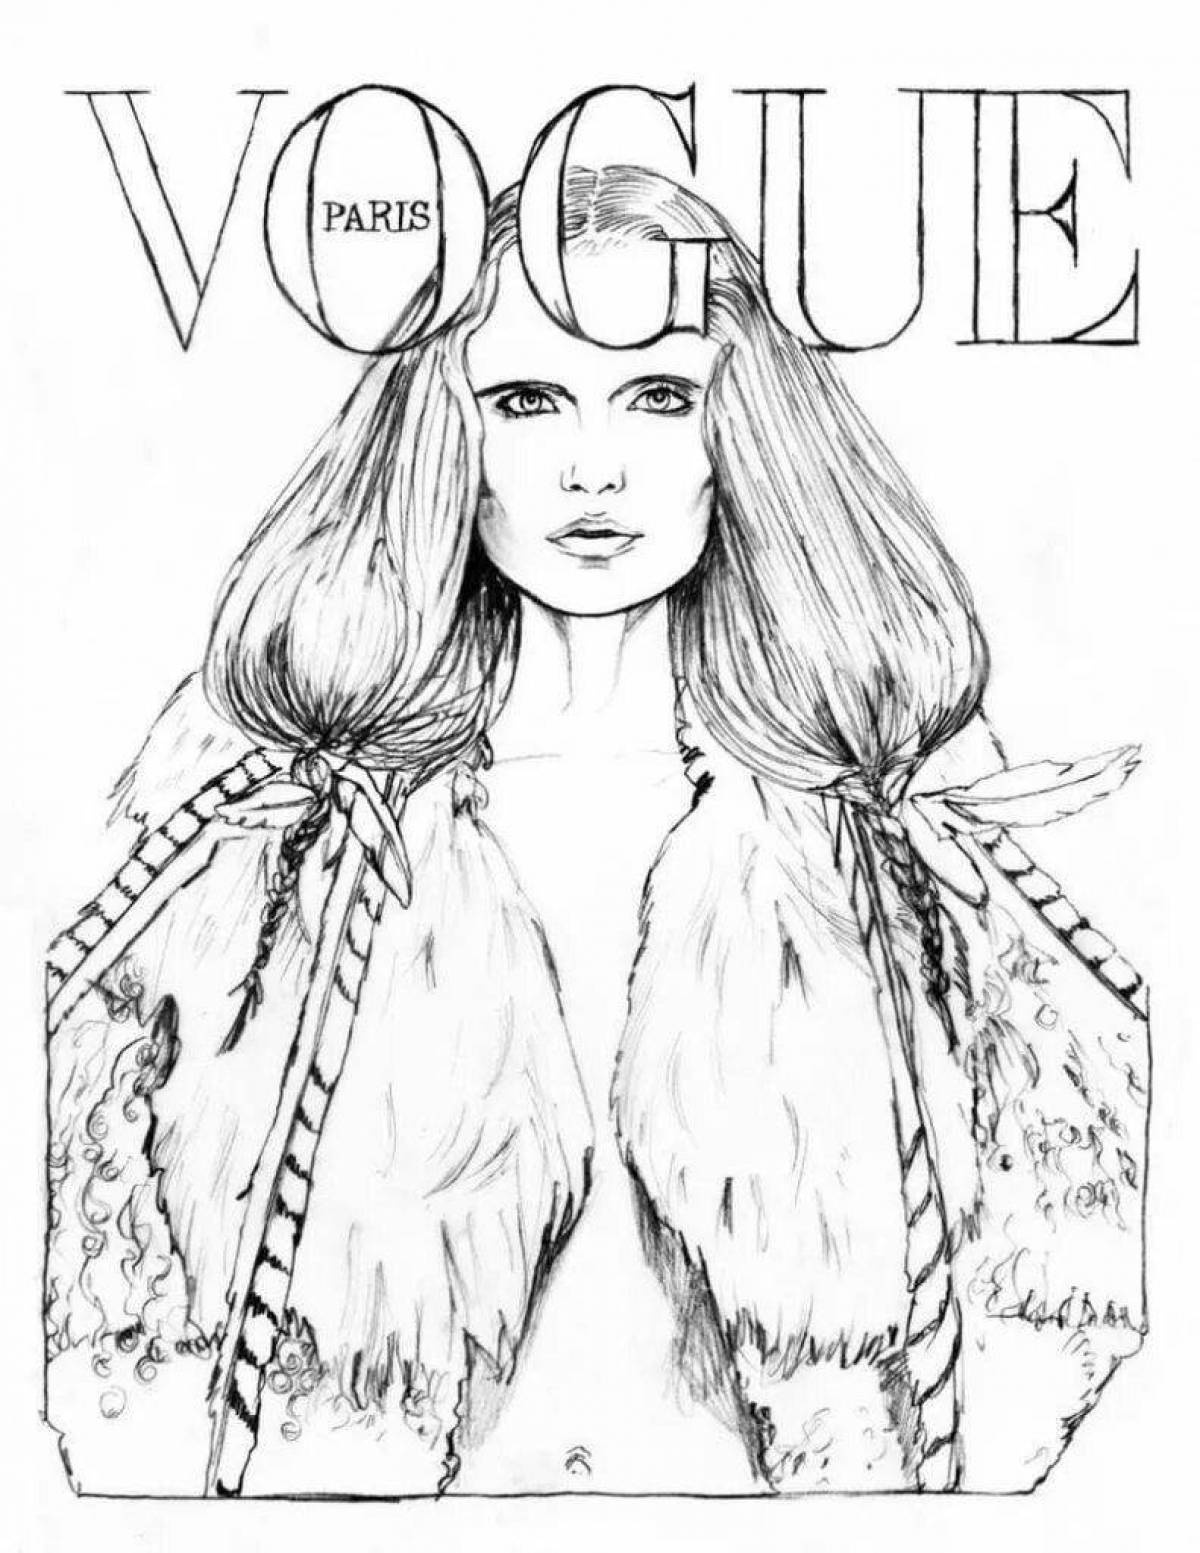 Vogue #7